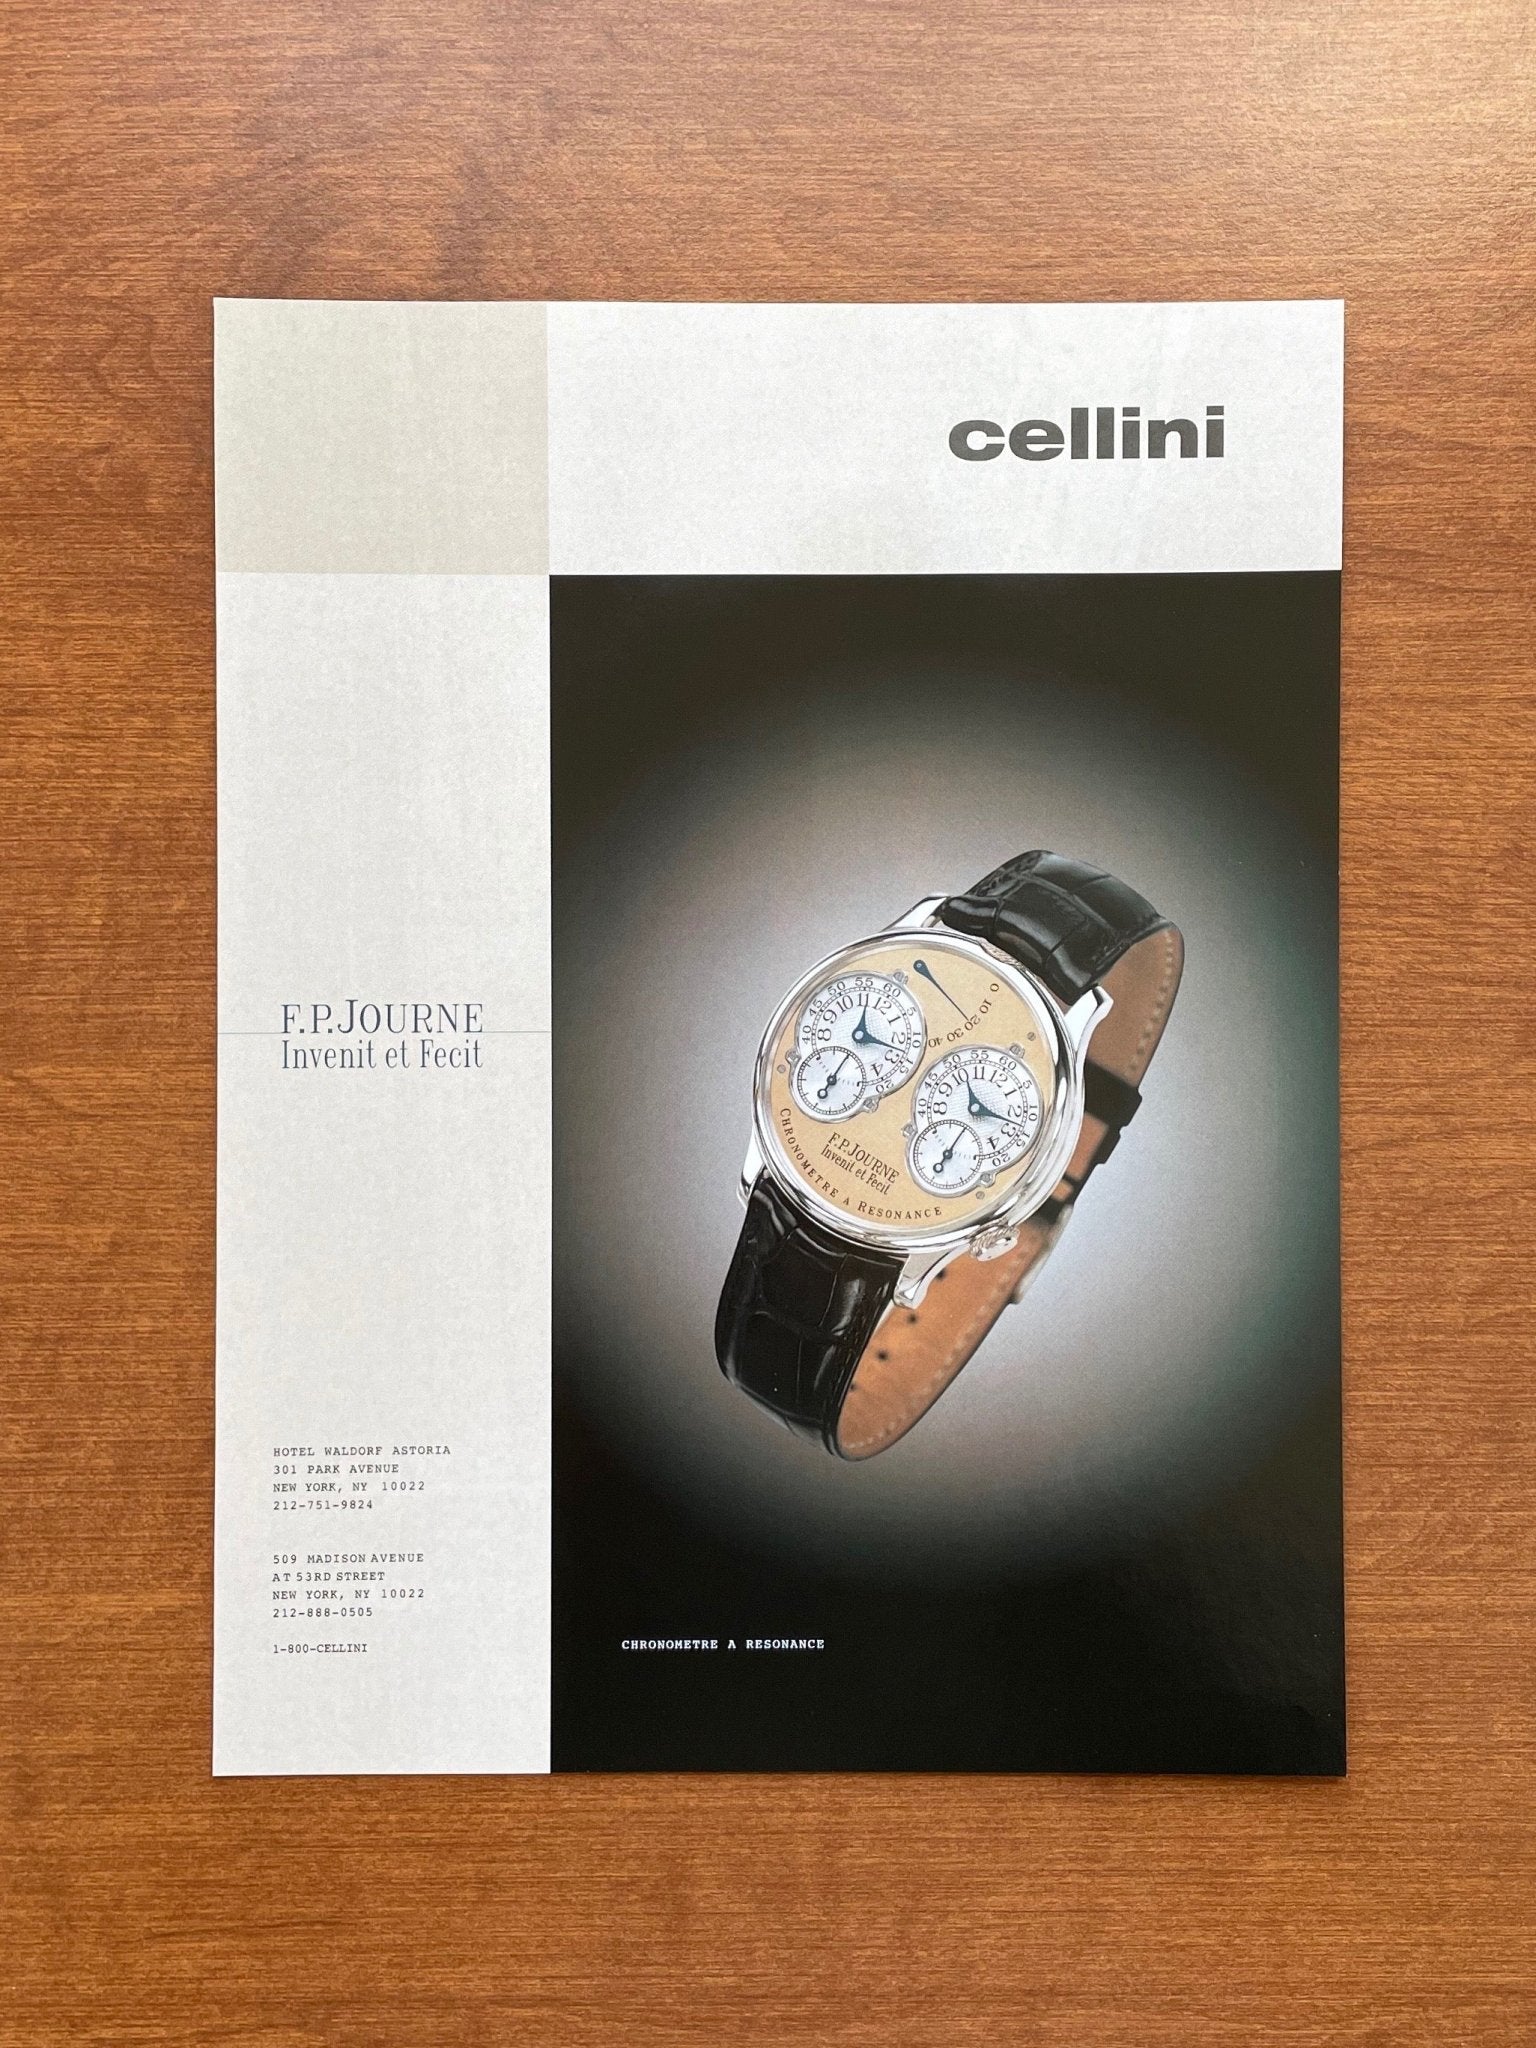 F.P. Journe Chronometre A Resonance at Cellini Advertisement